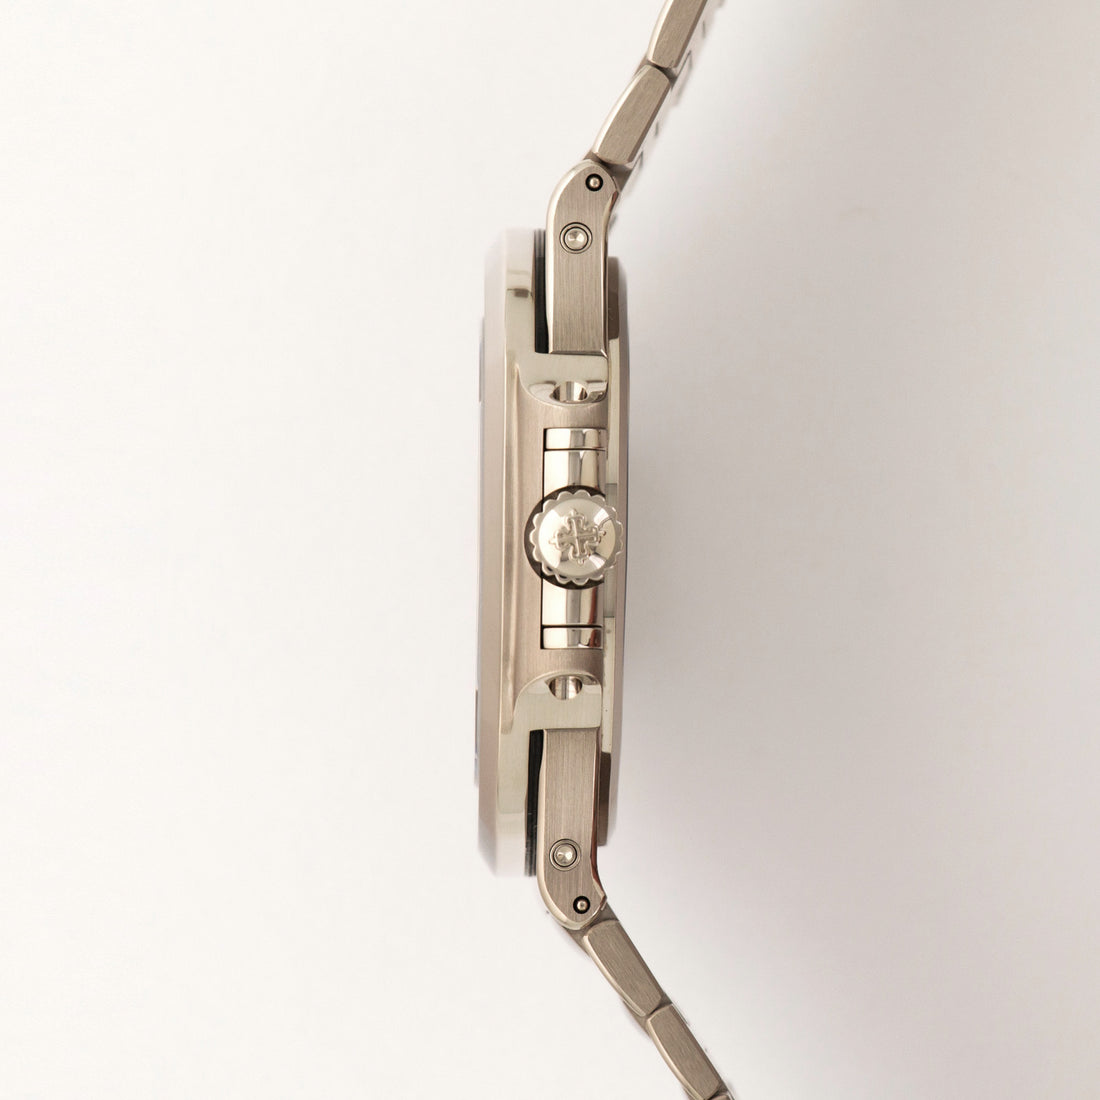 Patek Philippe White Gold Nautilus Perpetual Calendar Watch Ref. 5740